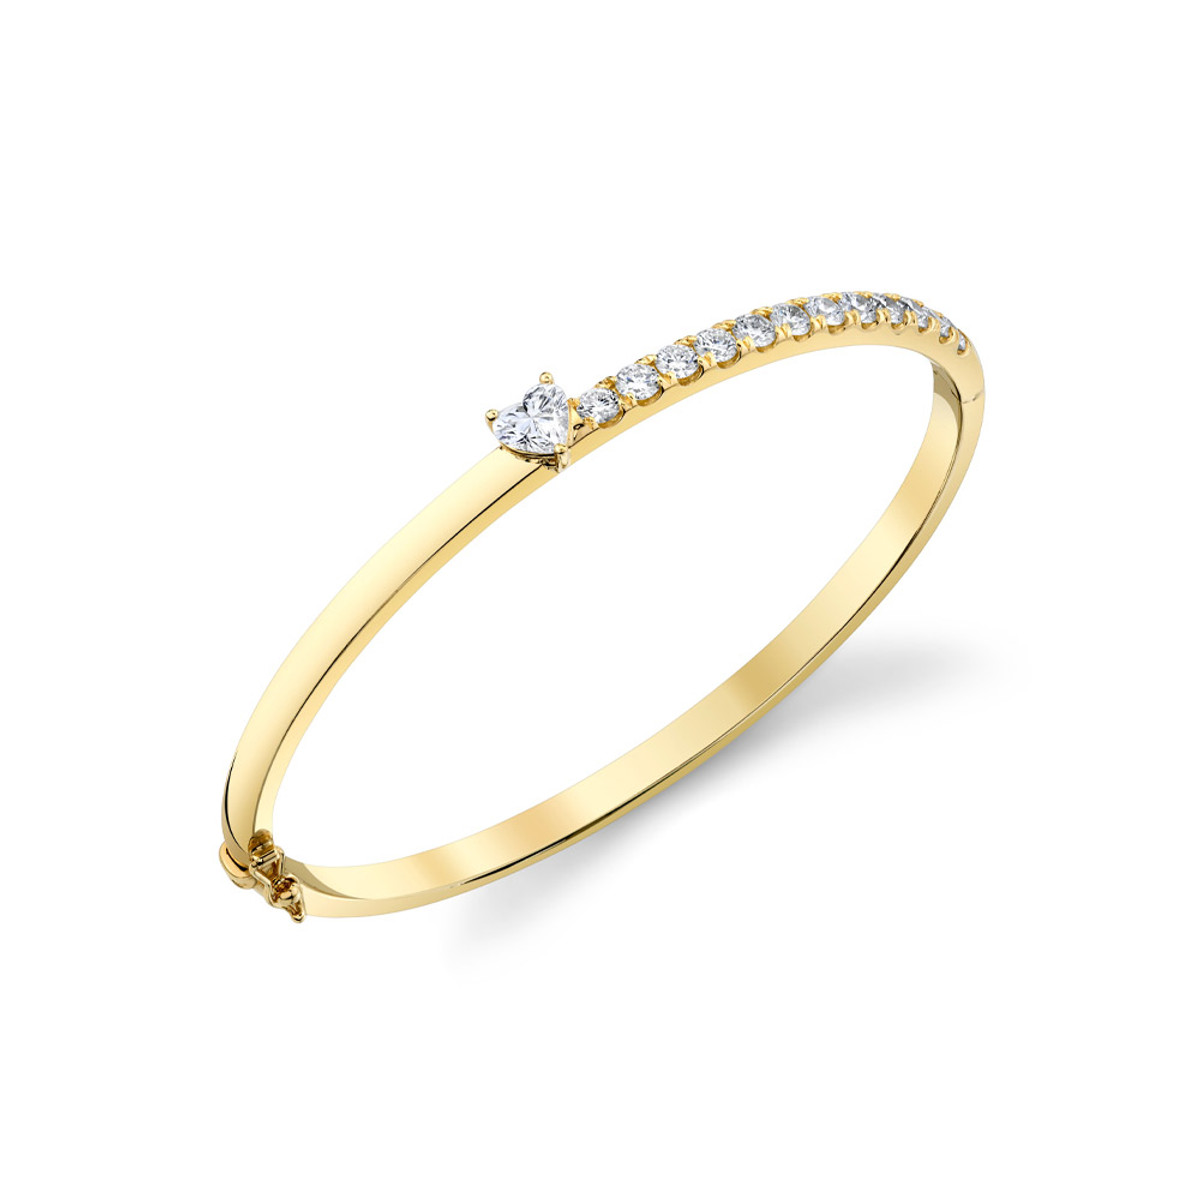 Hyde Park Collection 18K Yellow Gold Heart Diamond Bangle Bracelet-55794